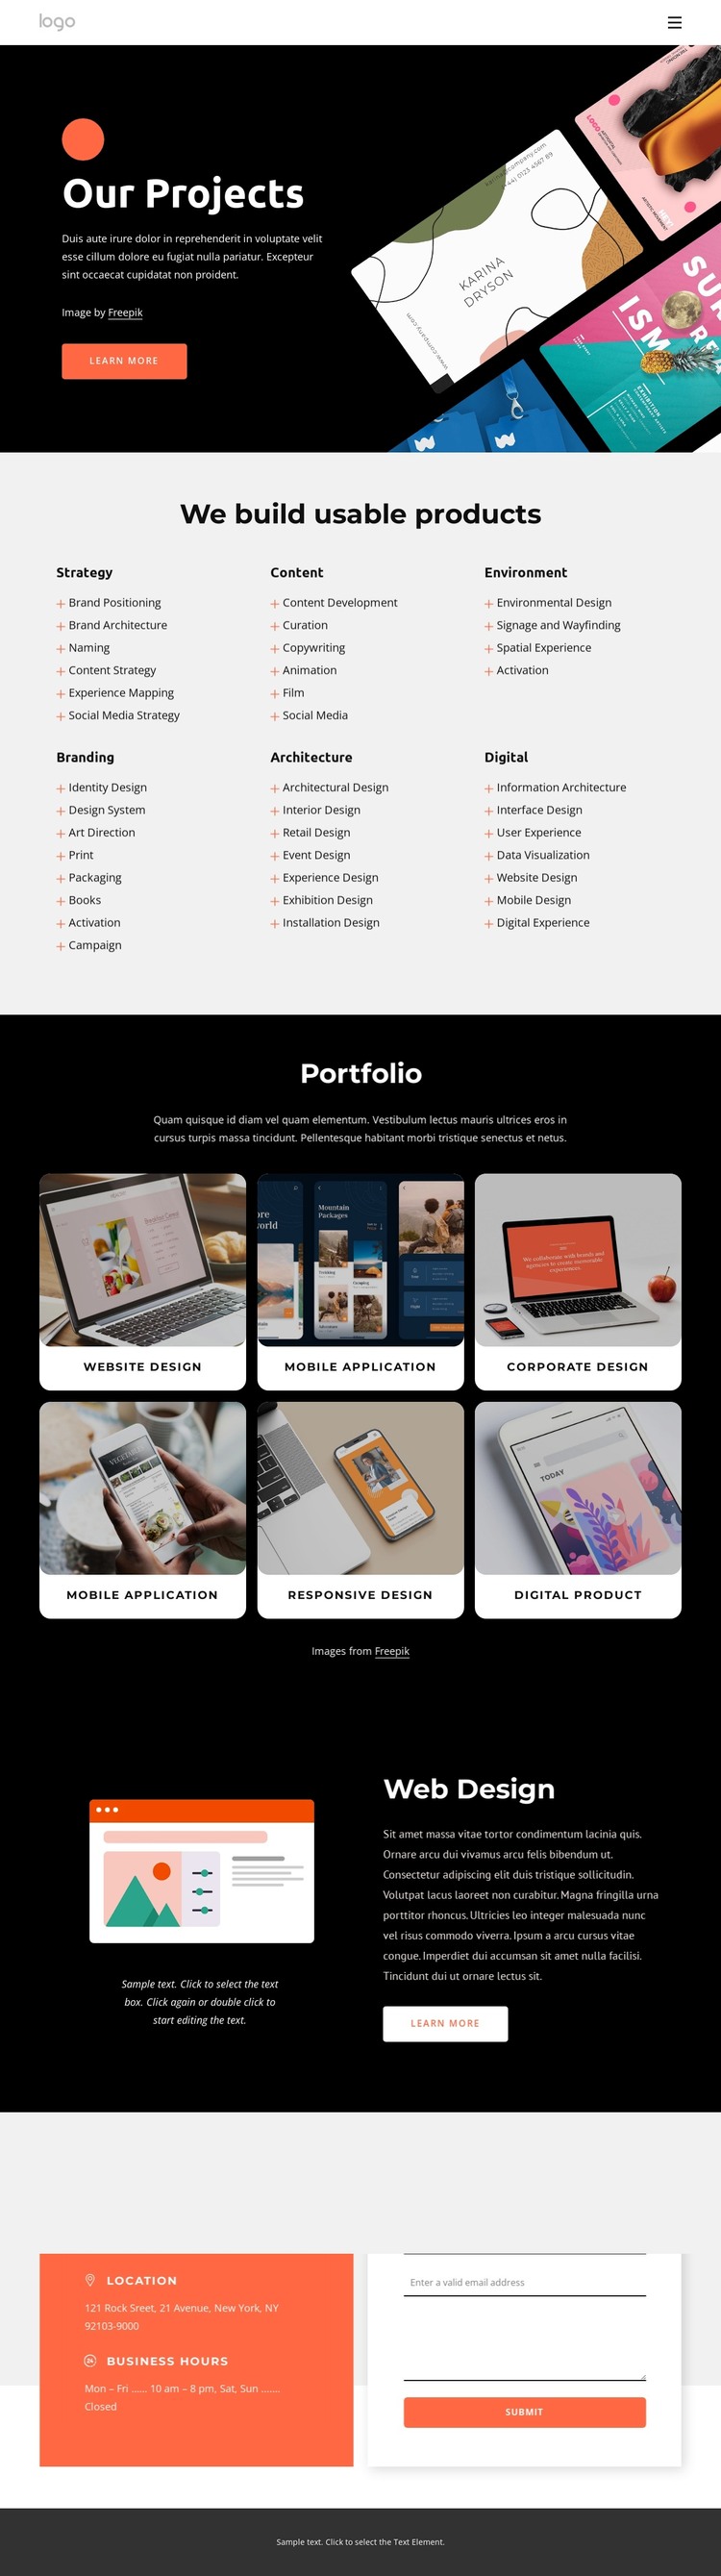 Our creative portfolio Web Design